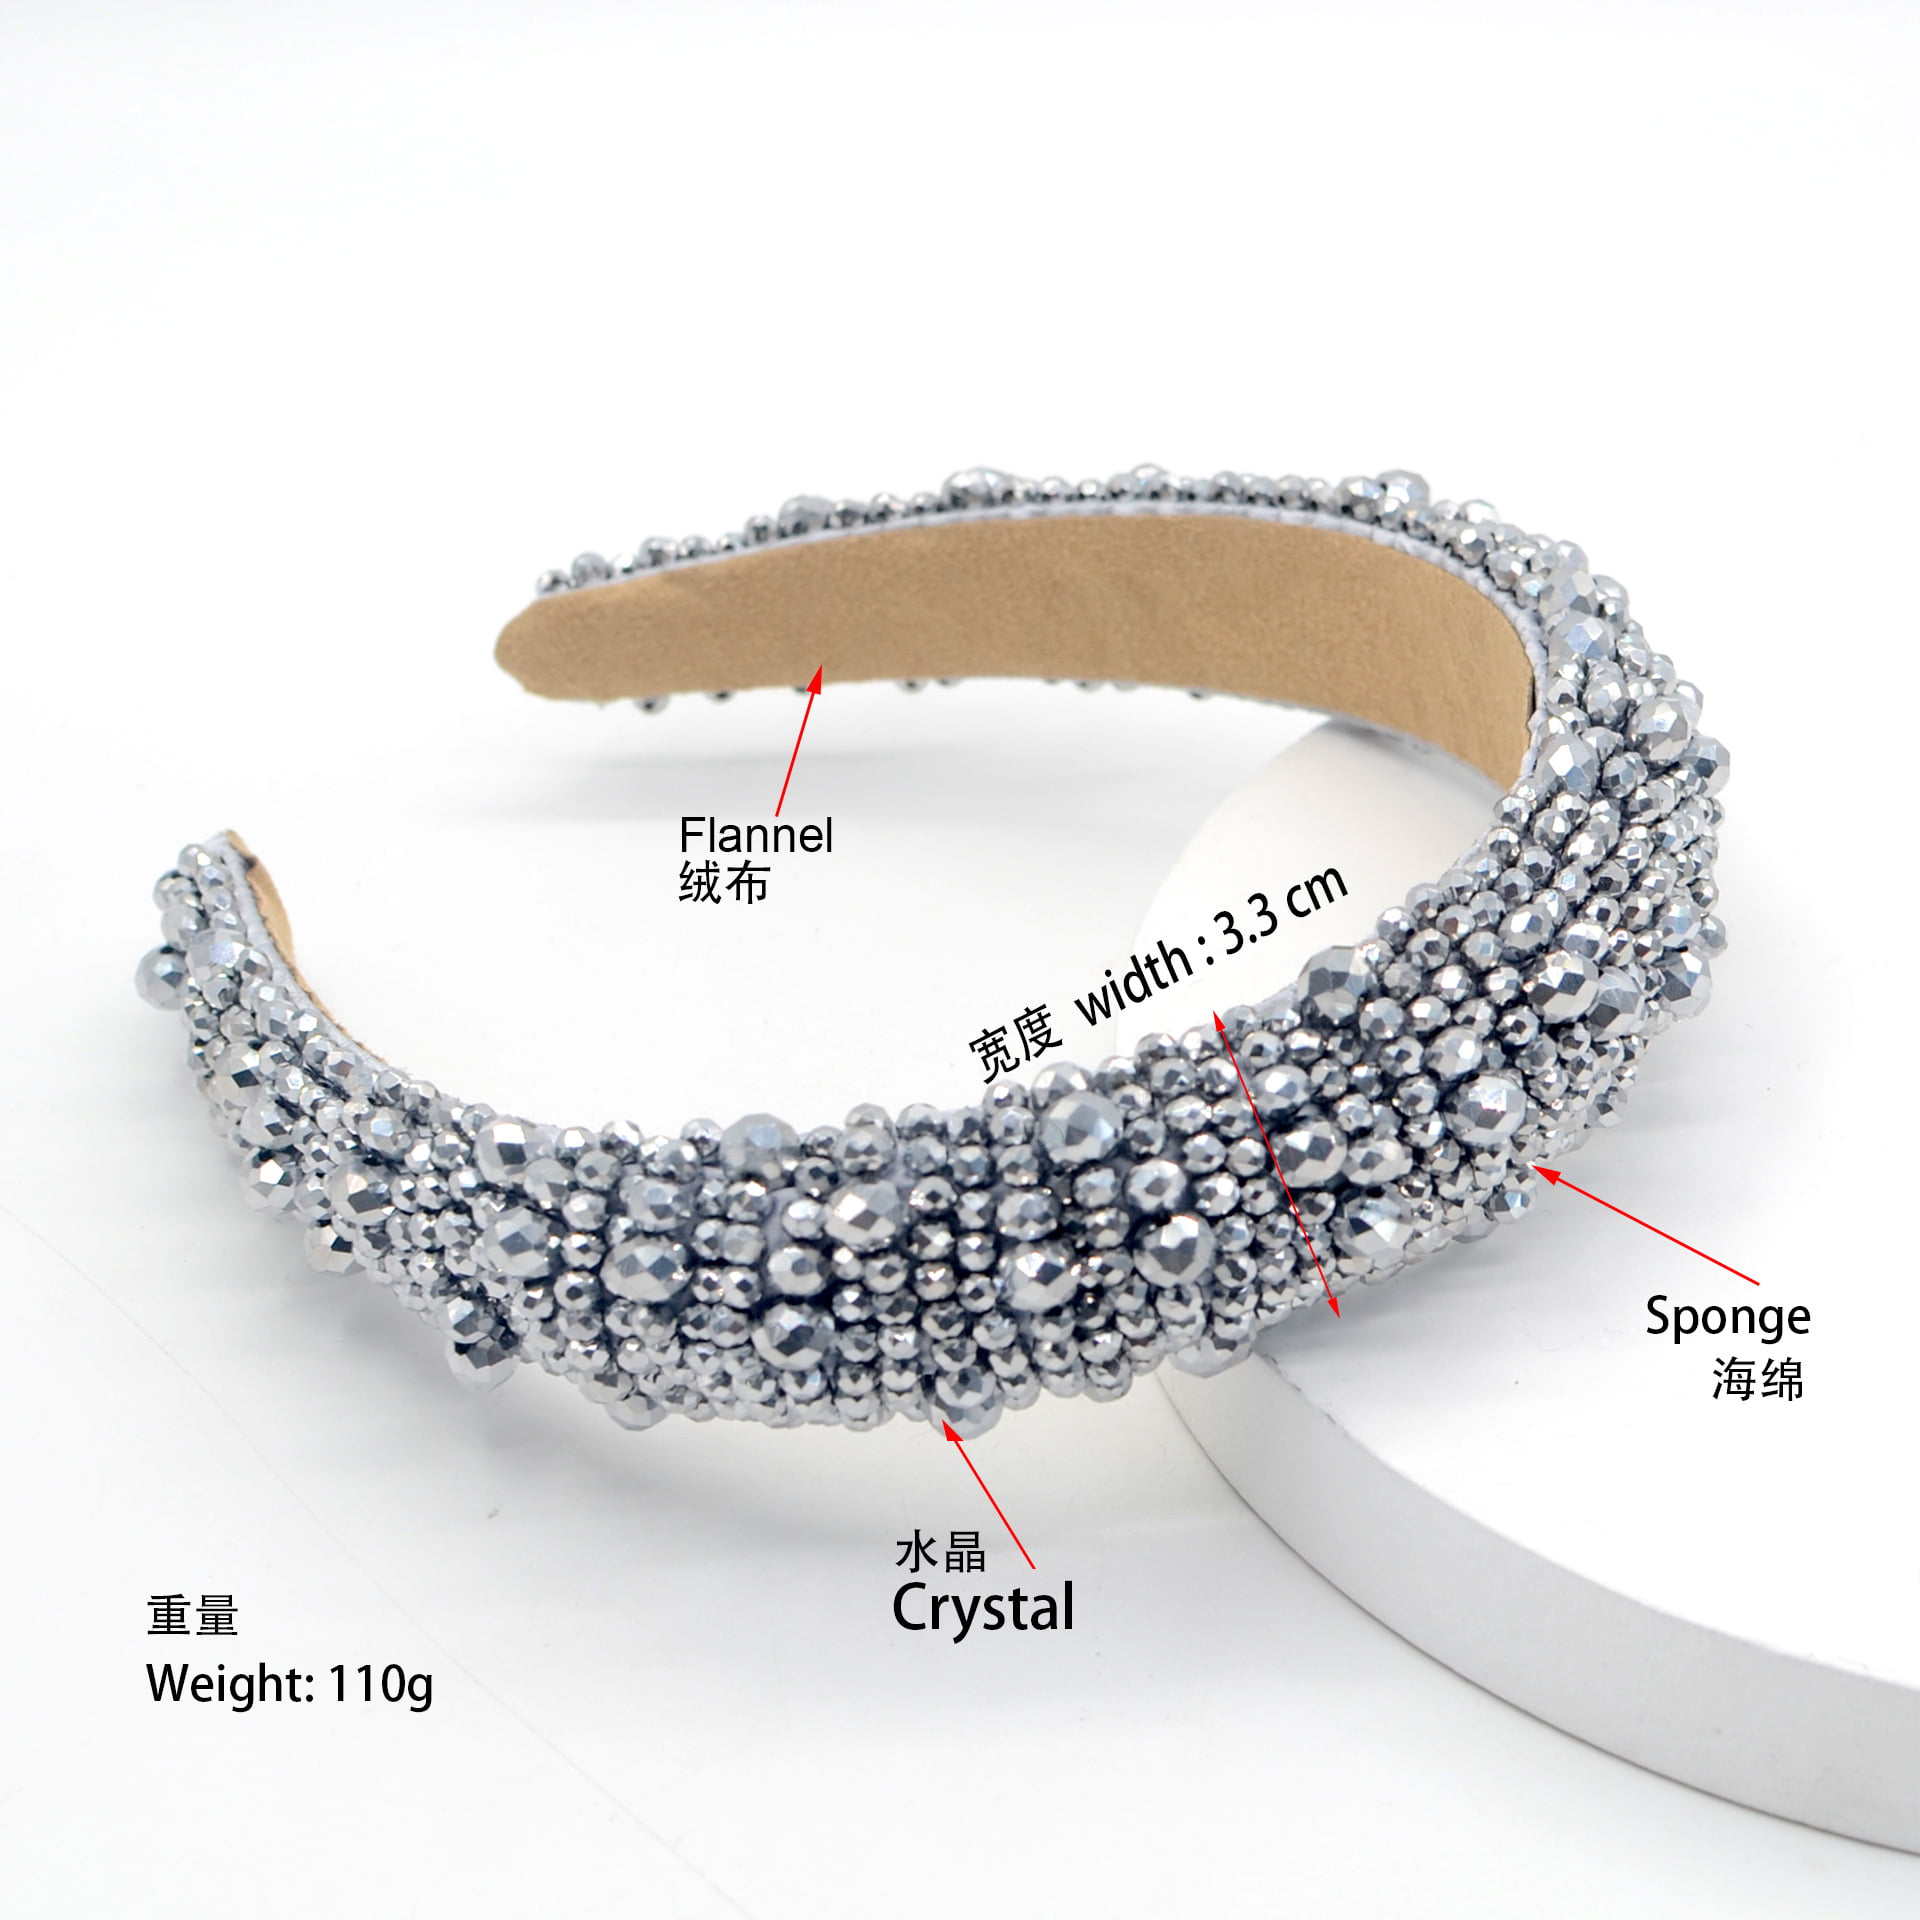 Diamante Red Velvet Padded headband 4 cms wide embellished Headpiece